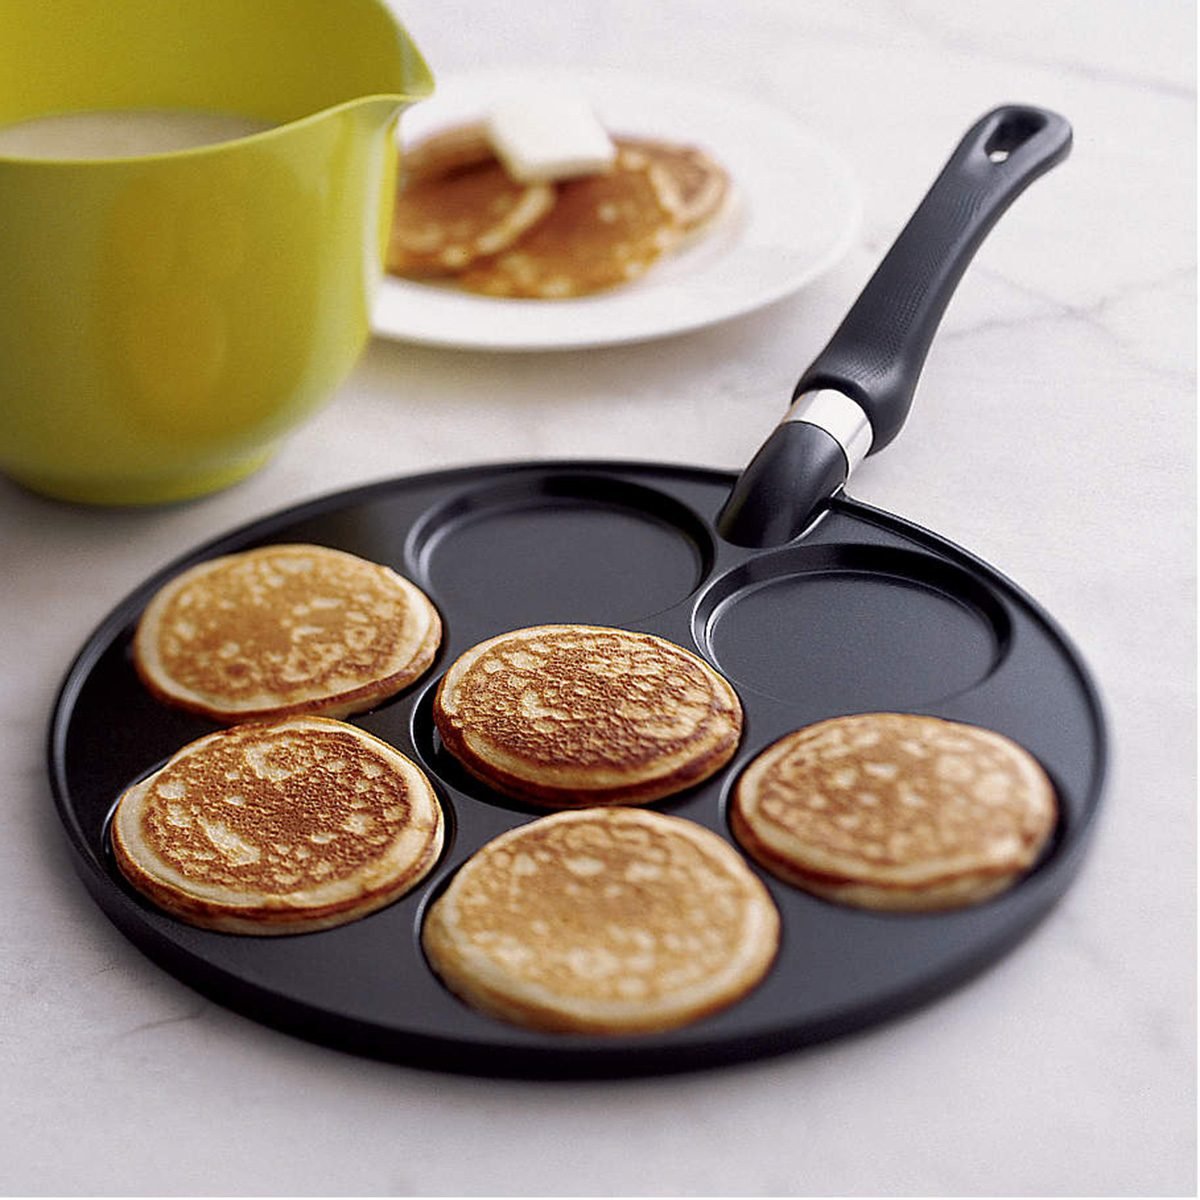 13 Best Pancake Maker Options of 2022 